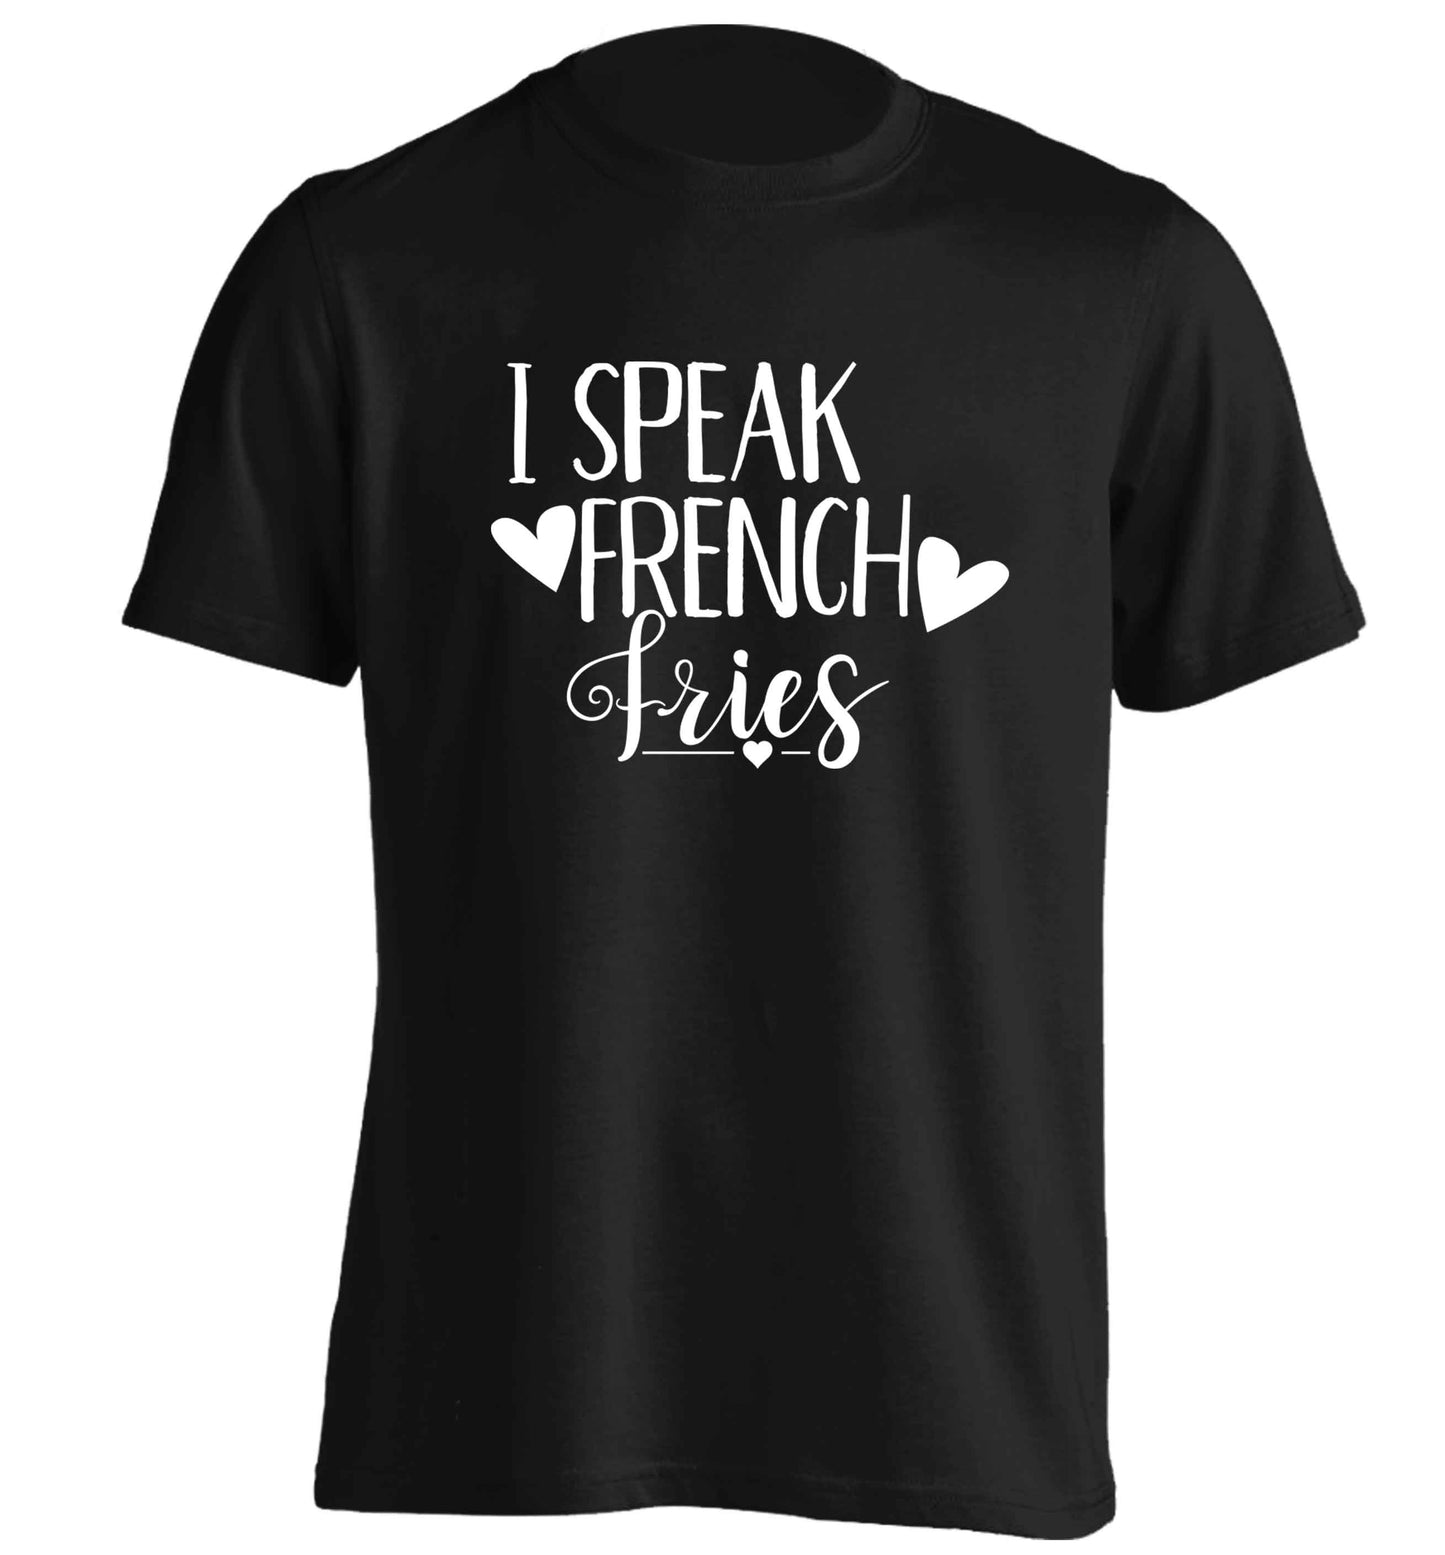 I speak French fries adults unisex black Tshirt 2XL